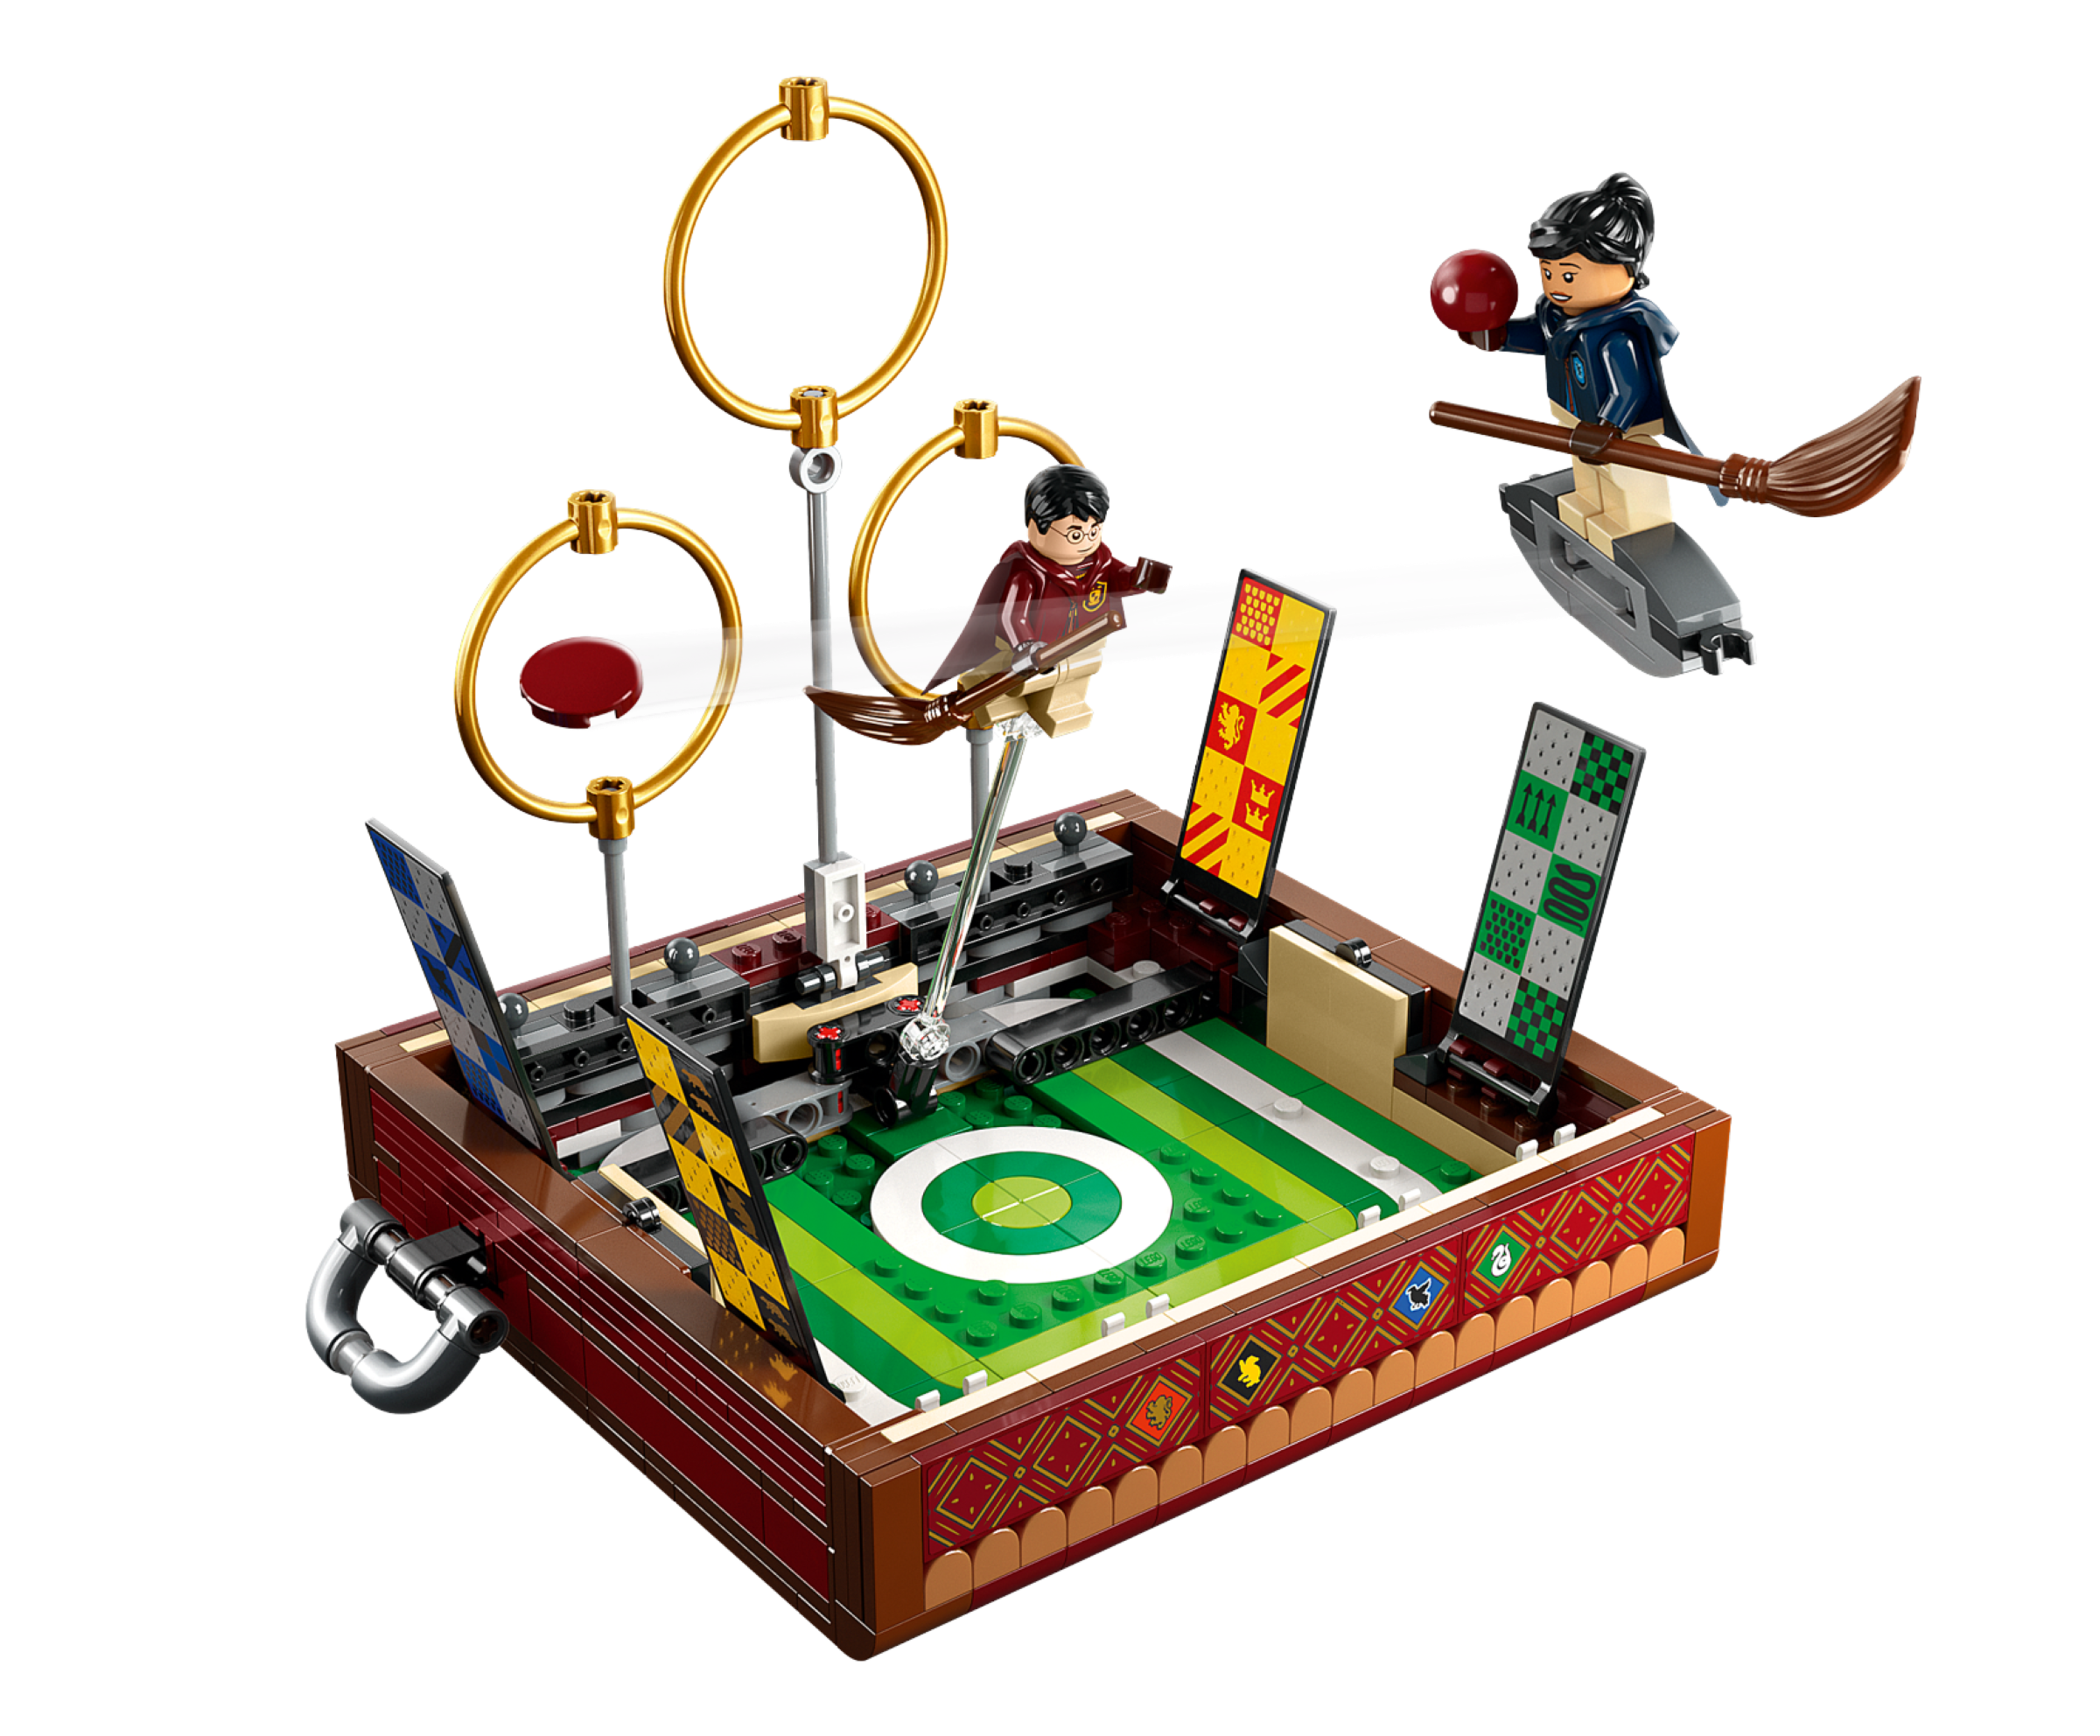 LEGO Harry Potter Quidditch Trunk 76416 6426009 - Best Buy